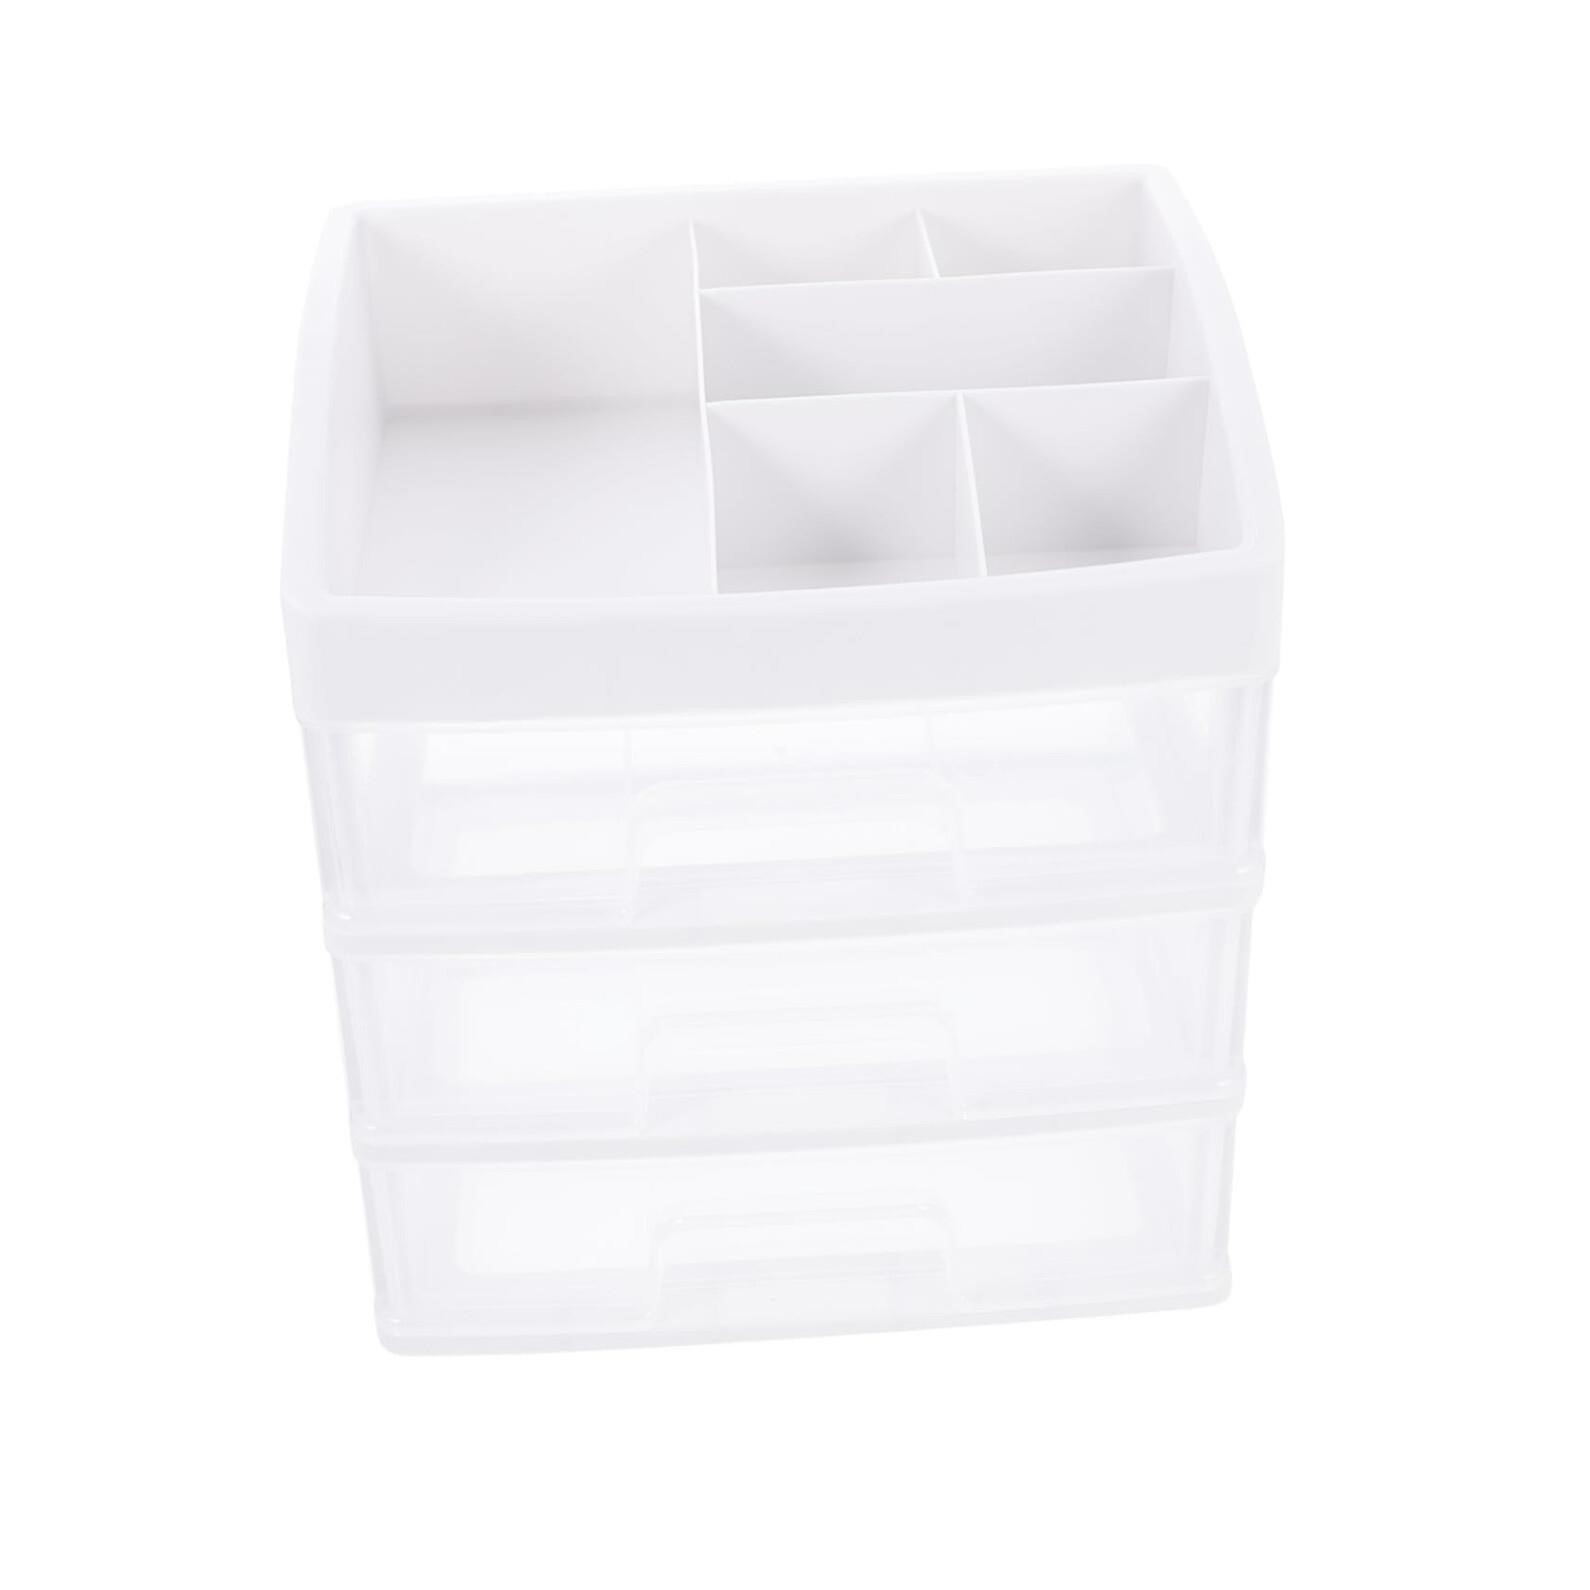 DIYEAH 1pc Cosmetic Storage Box Quilt Storage Make